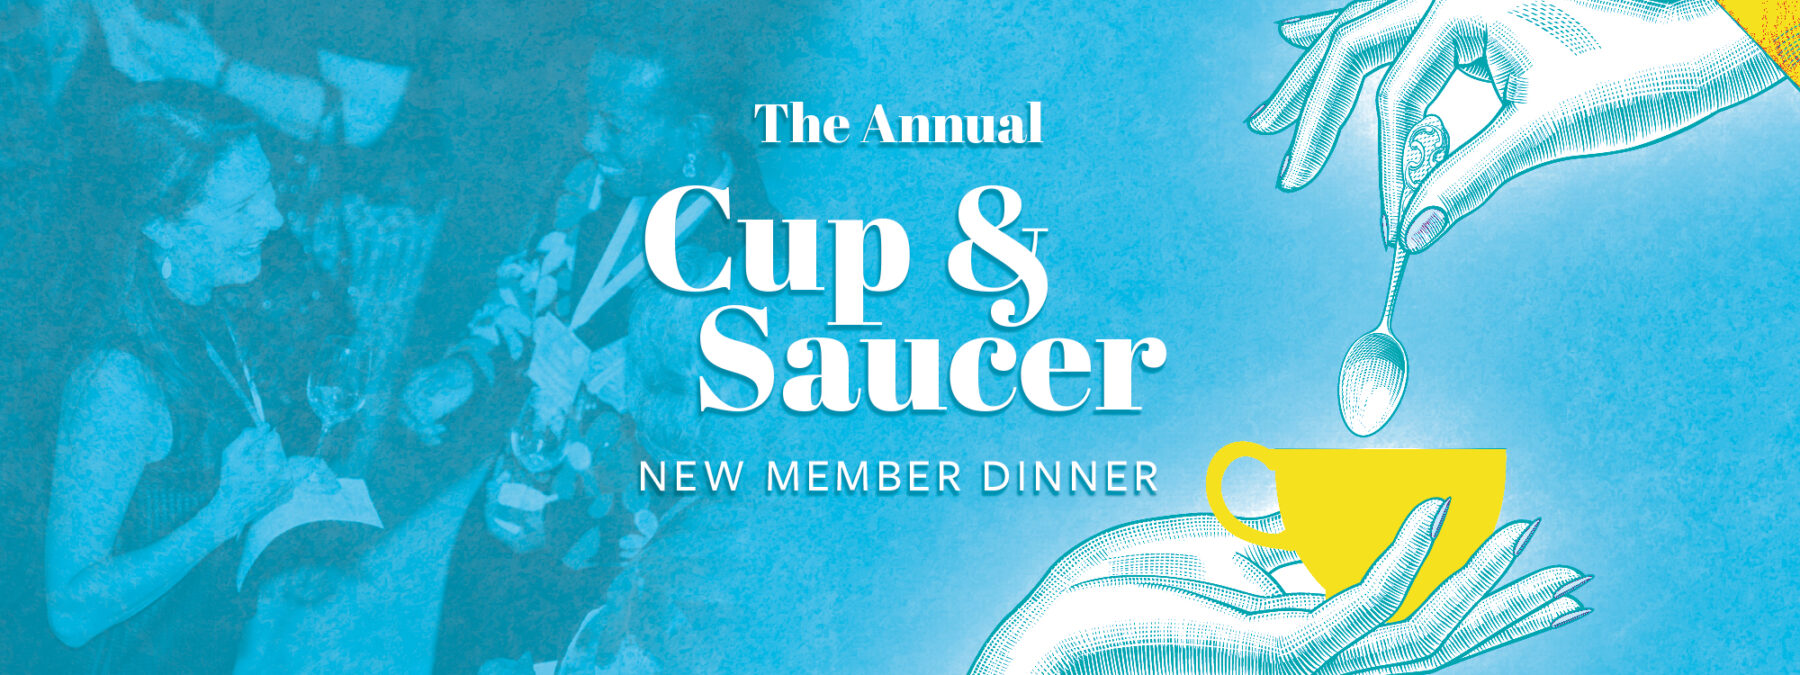 Cup & Saucer New Member Dinner